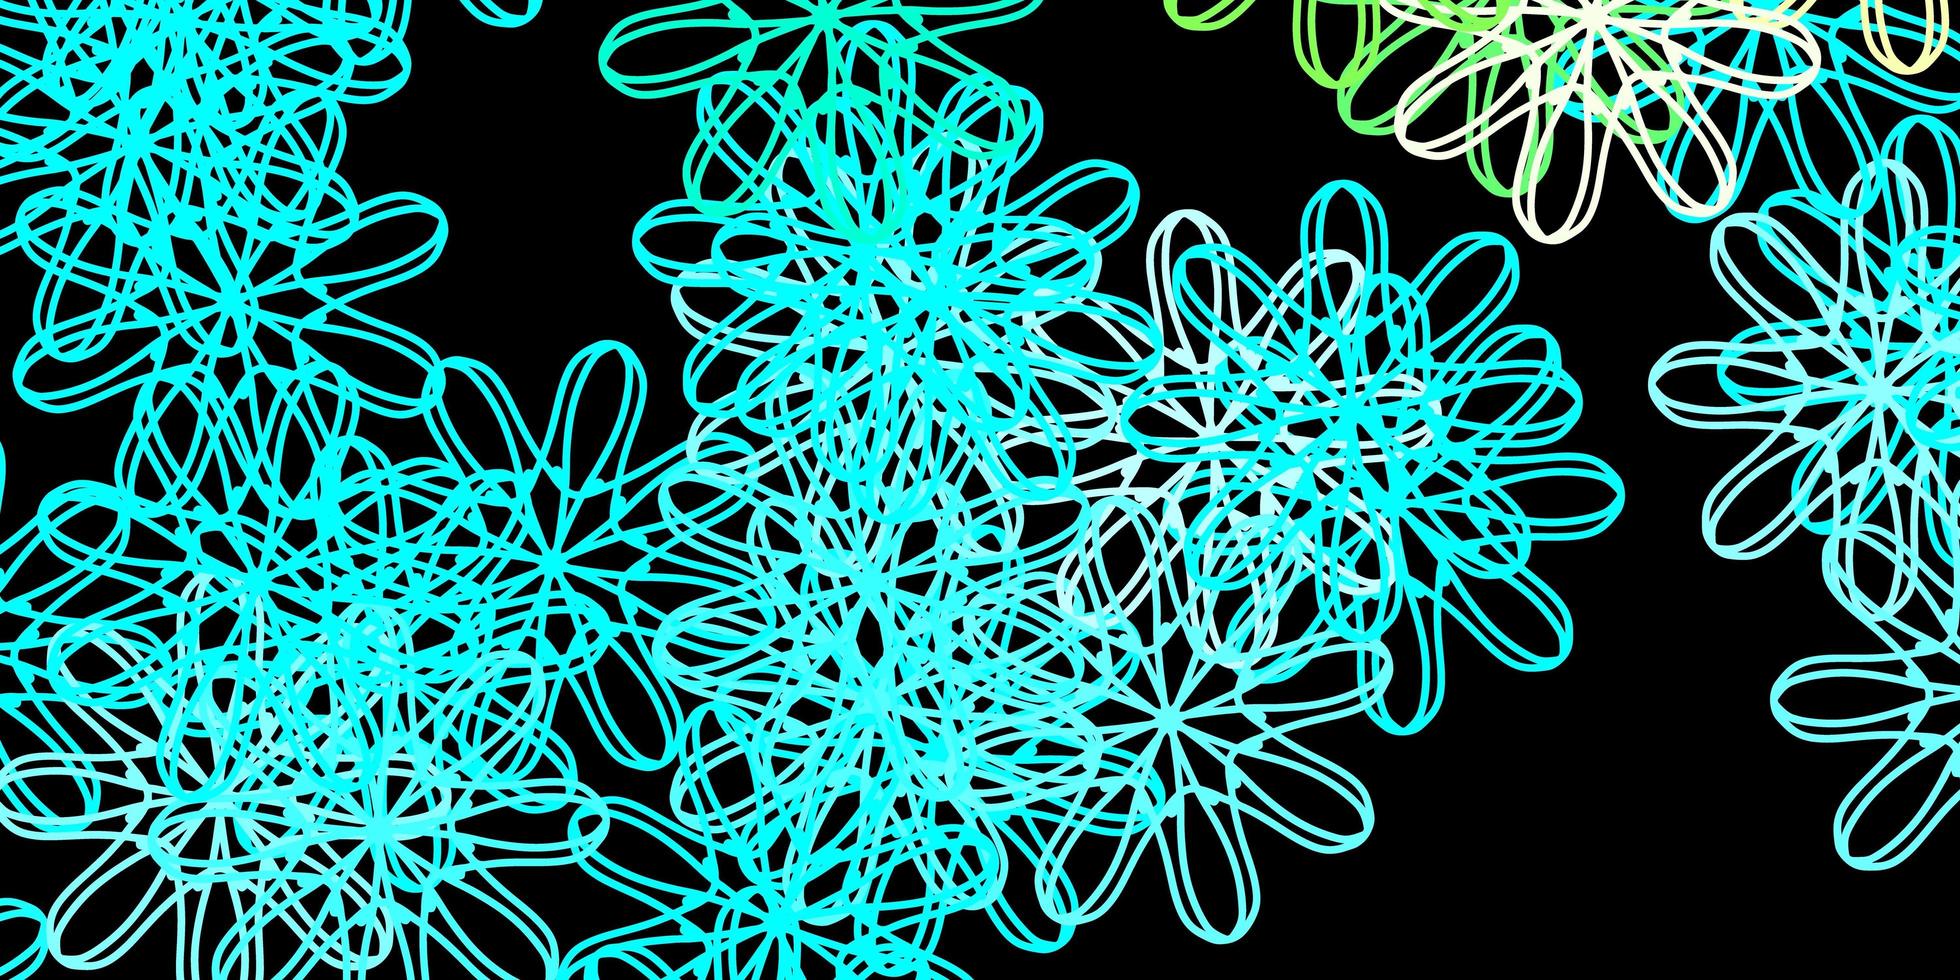 Dark Blue Green vector background with random forms